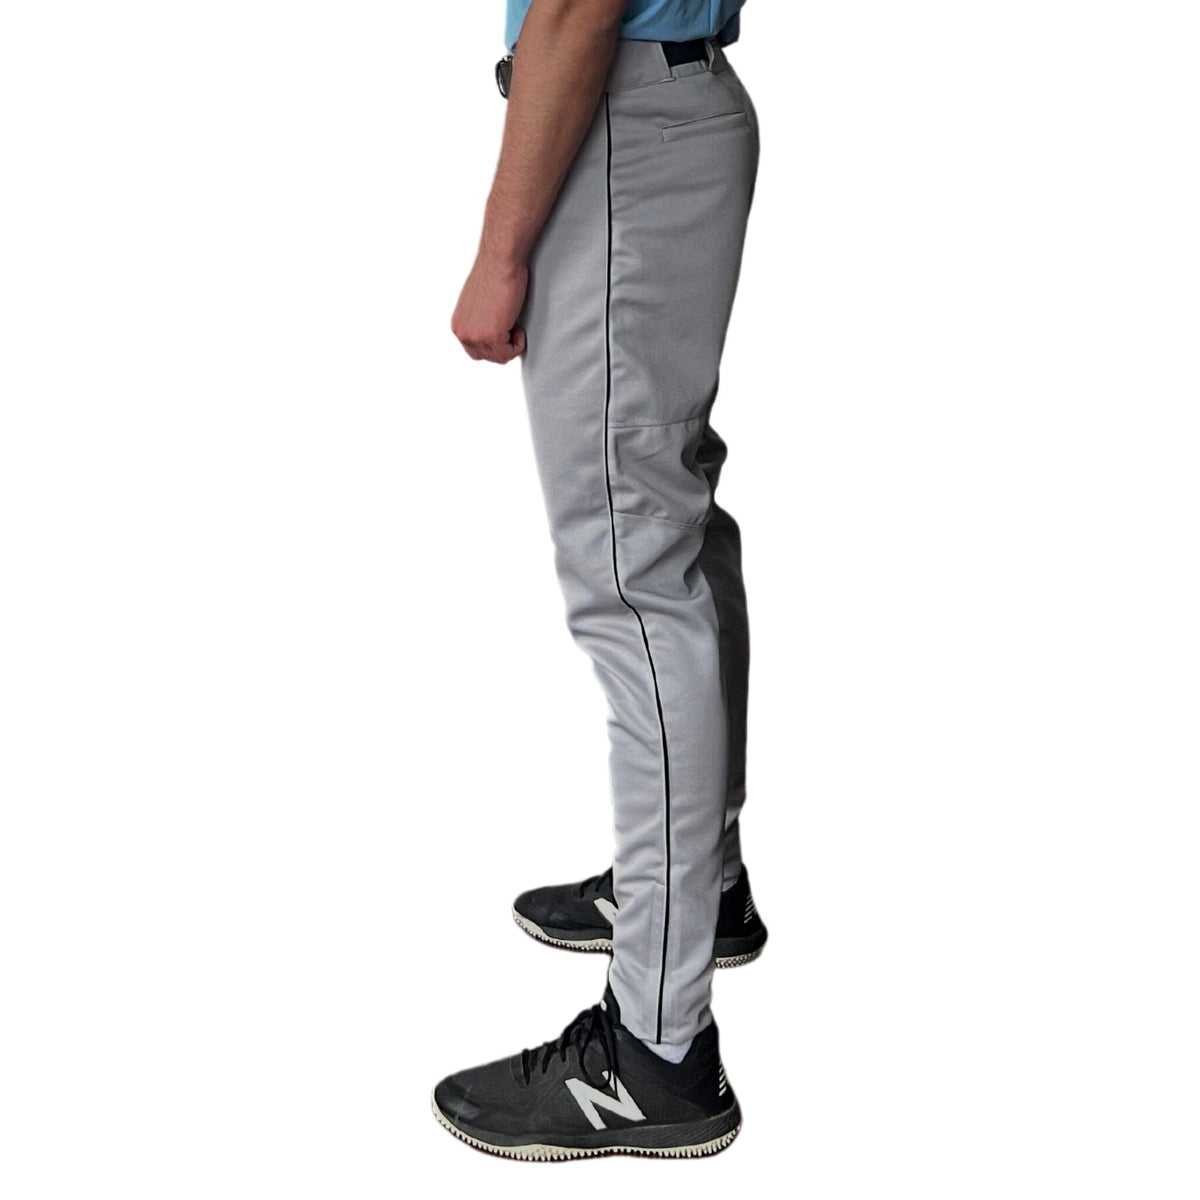 BRUCE BOLT Premium Pro Baseball Pant - GREY w/ Black Piping